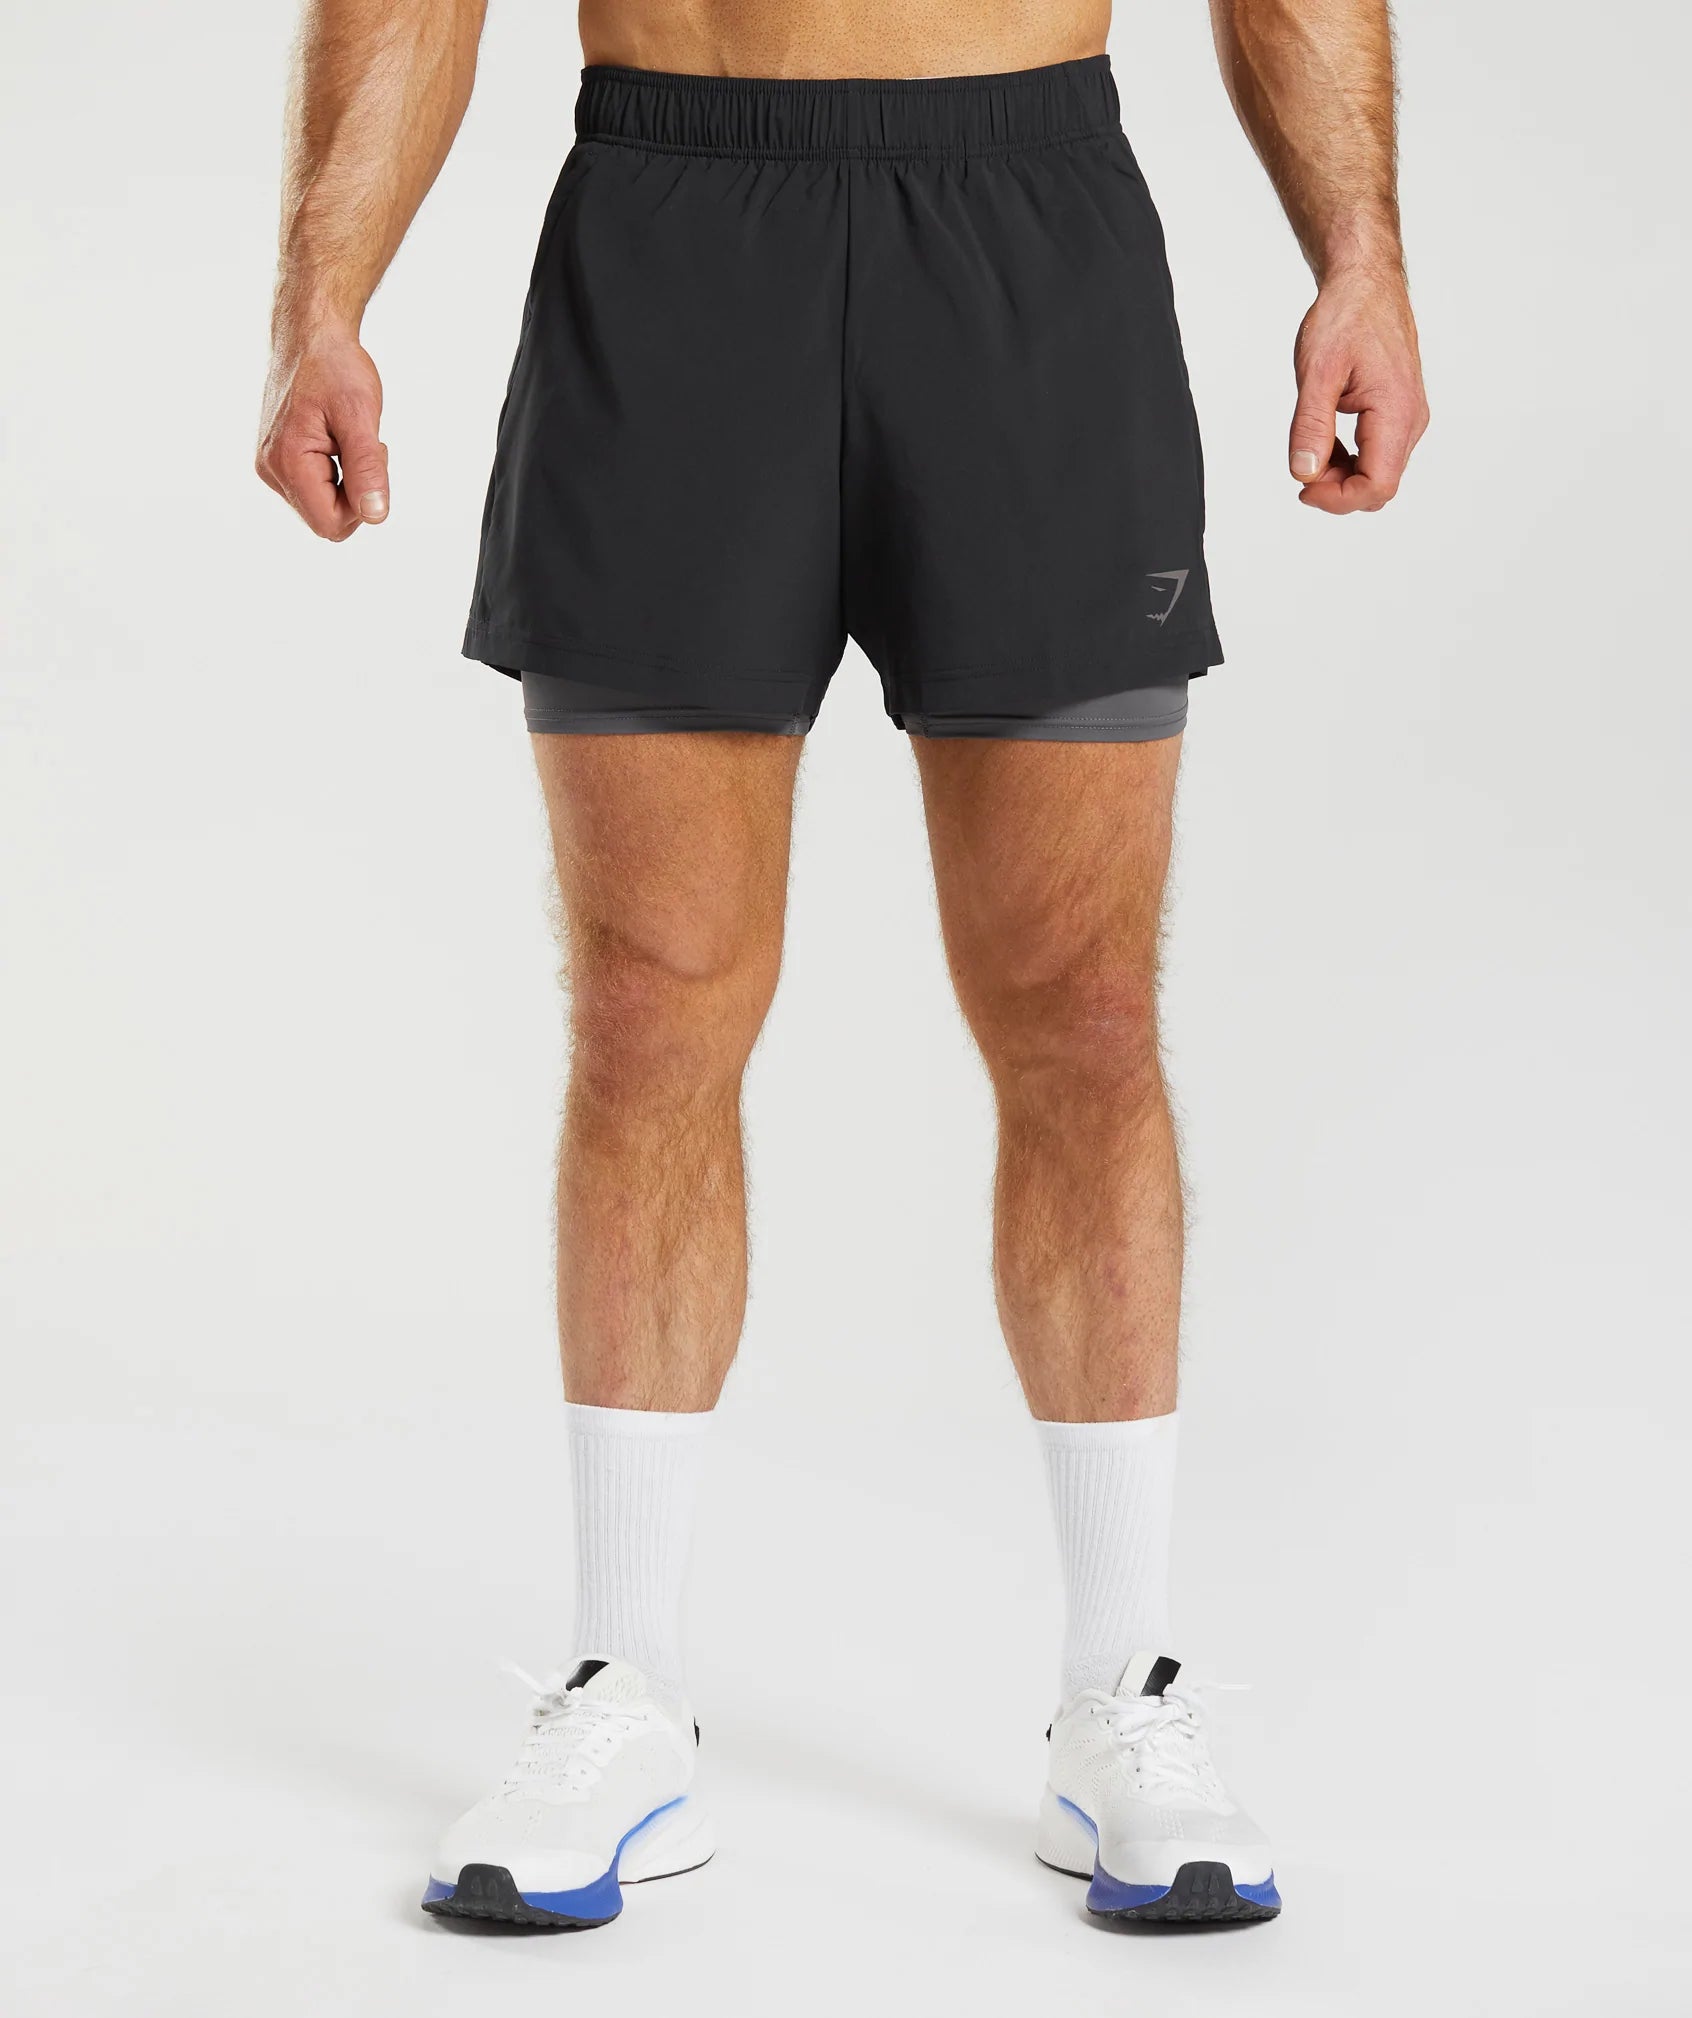 Gymshark Running 2 In 1 Shorts - Black/Silhouette Grey